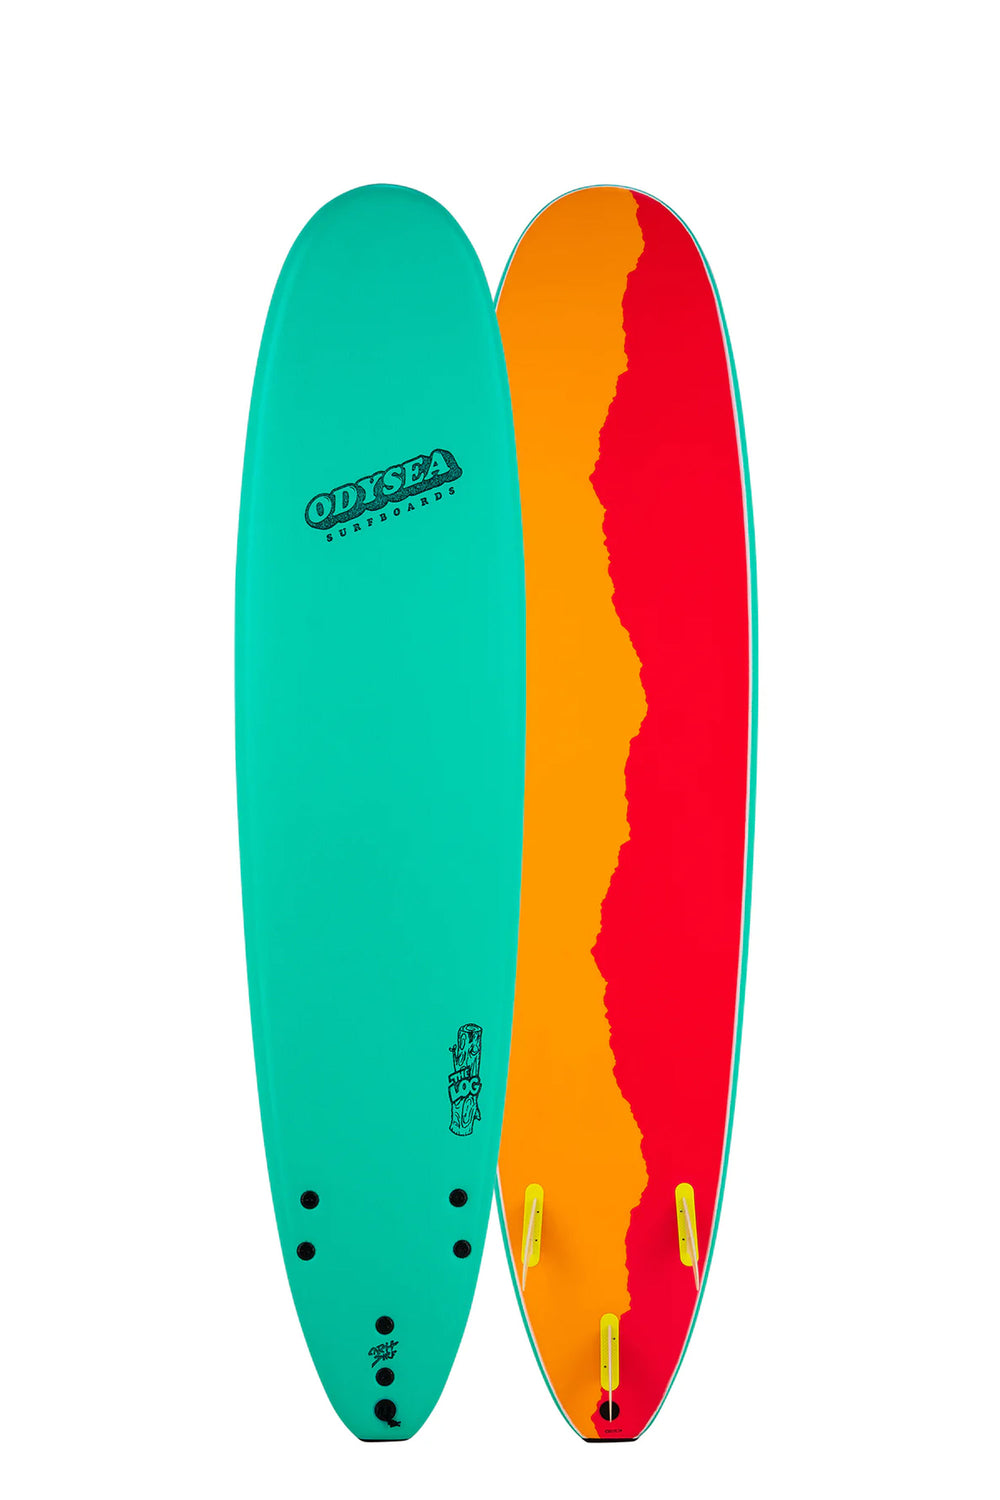 Pukas-Surf-Shop-Catch-Surfboards-Odysea-Log-8_0-ODY80